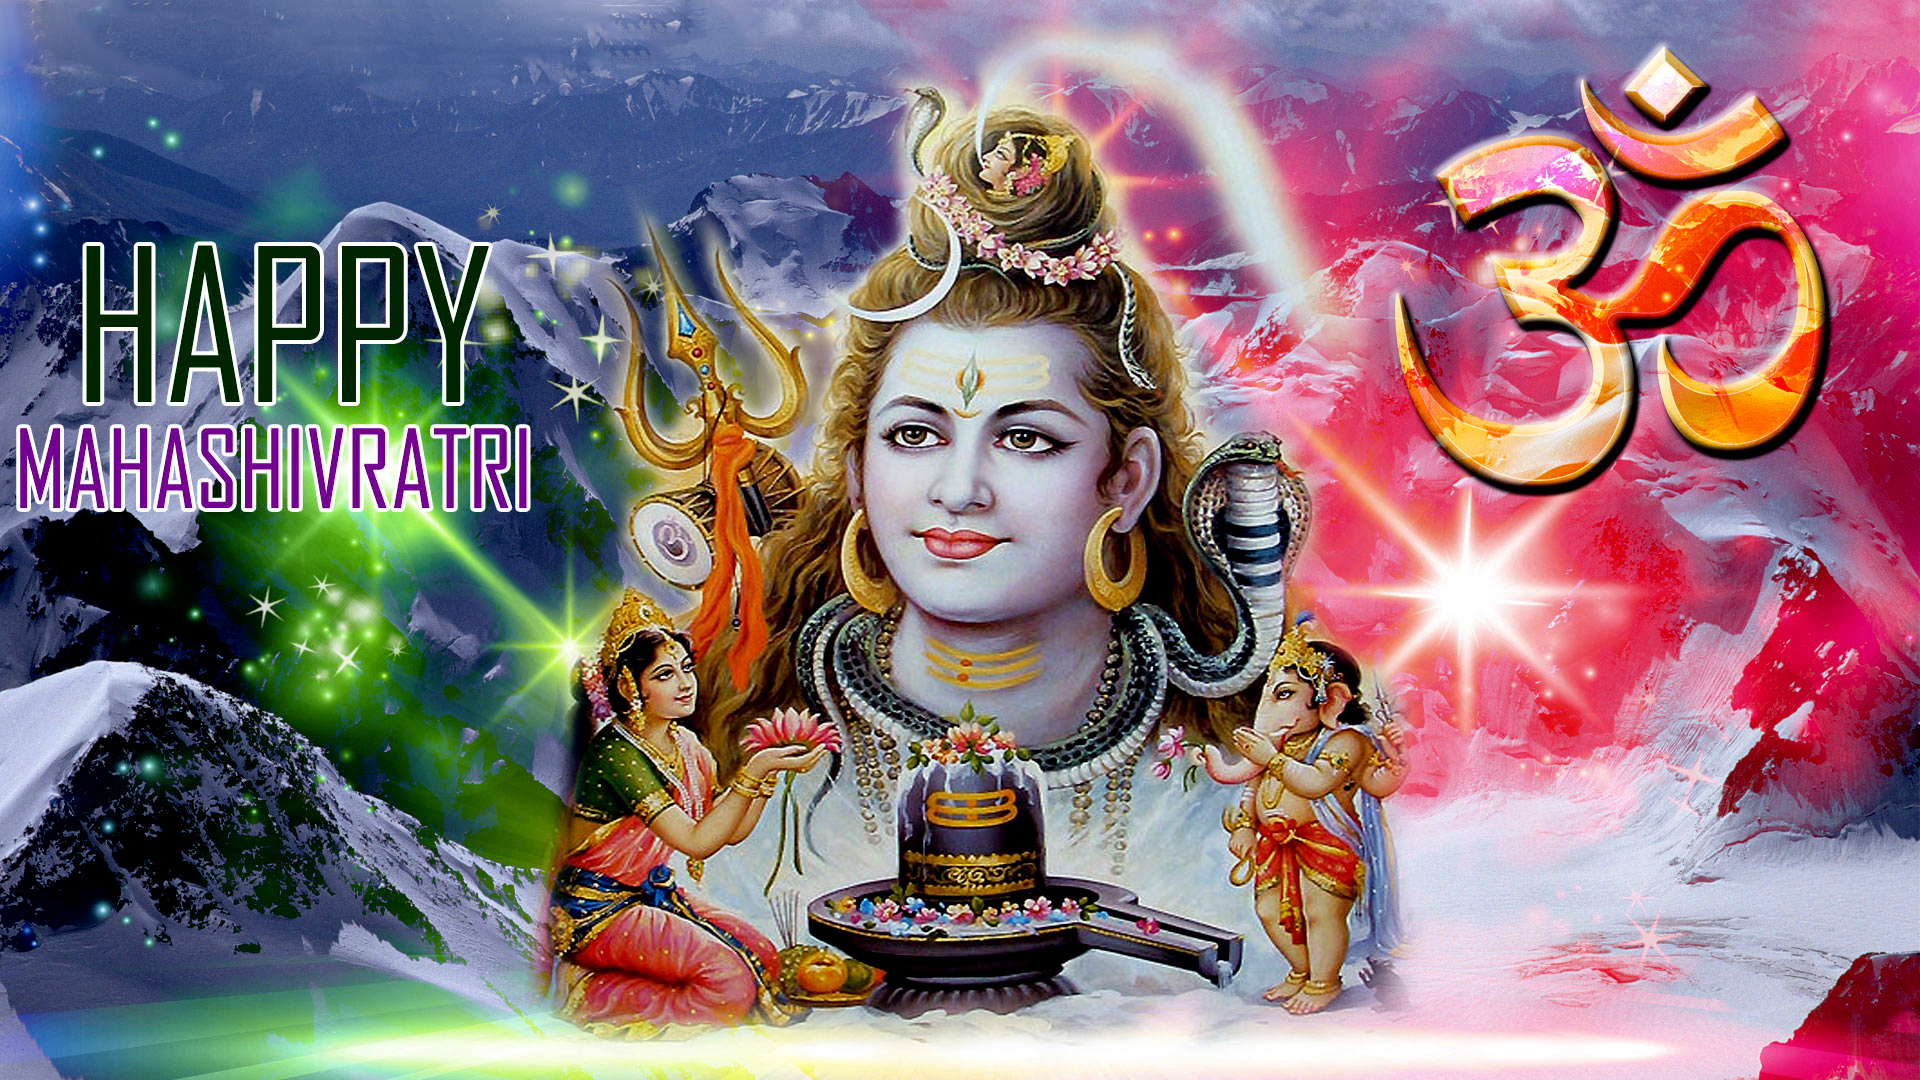 Happy Mahashivratri Wallpapers HD Images Photos Free Download